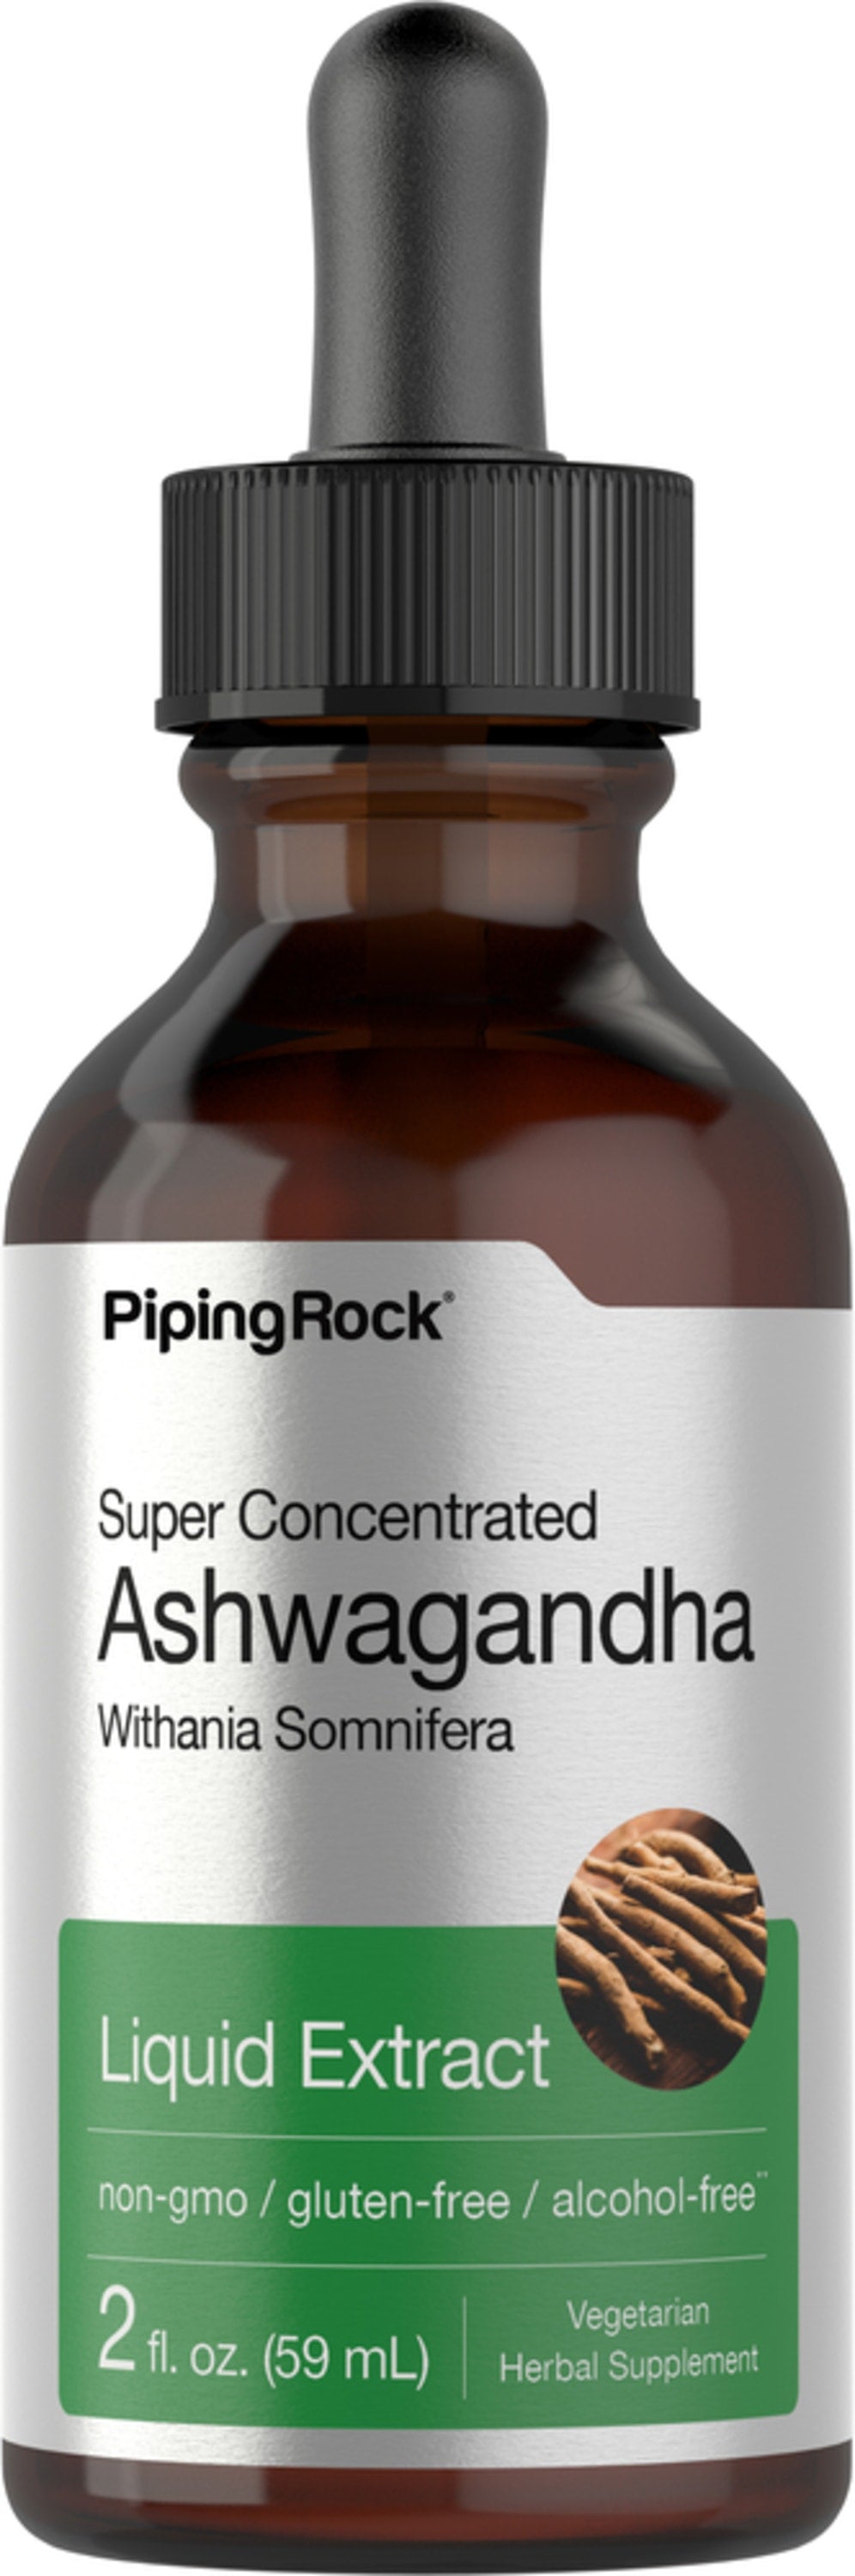 Ashwagandha Liquid Extract, 2 fl oz (59 mL) Dropper Bottle